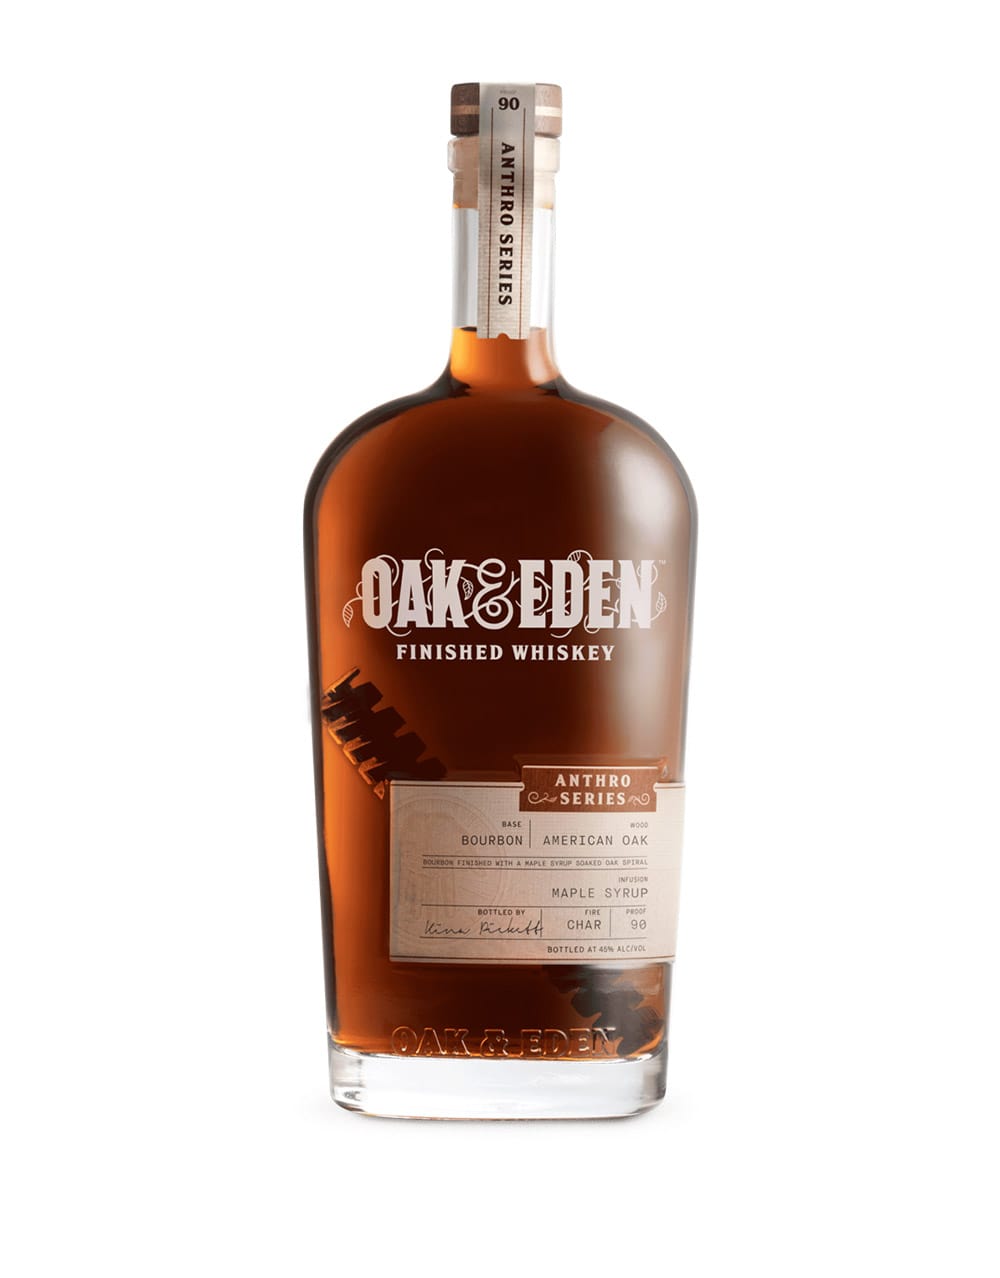 Oak & Eden finished whiskey Kina Picket